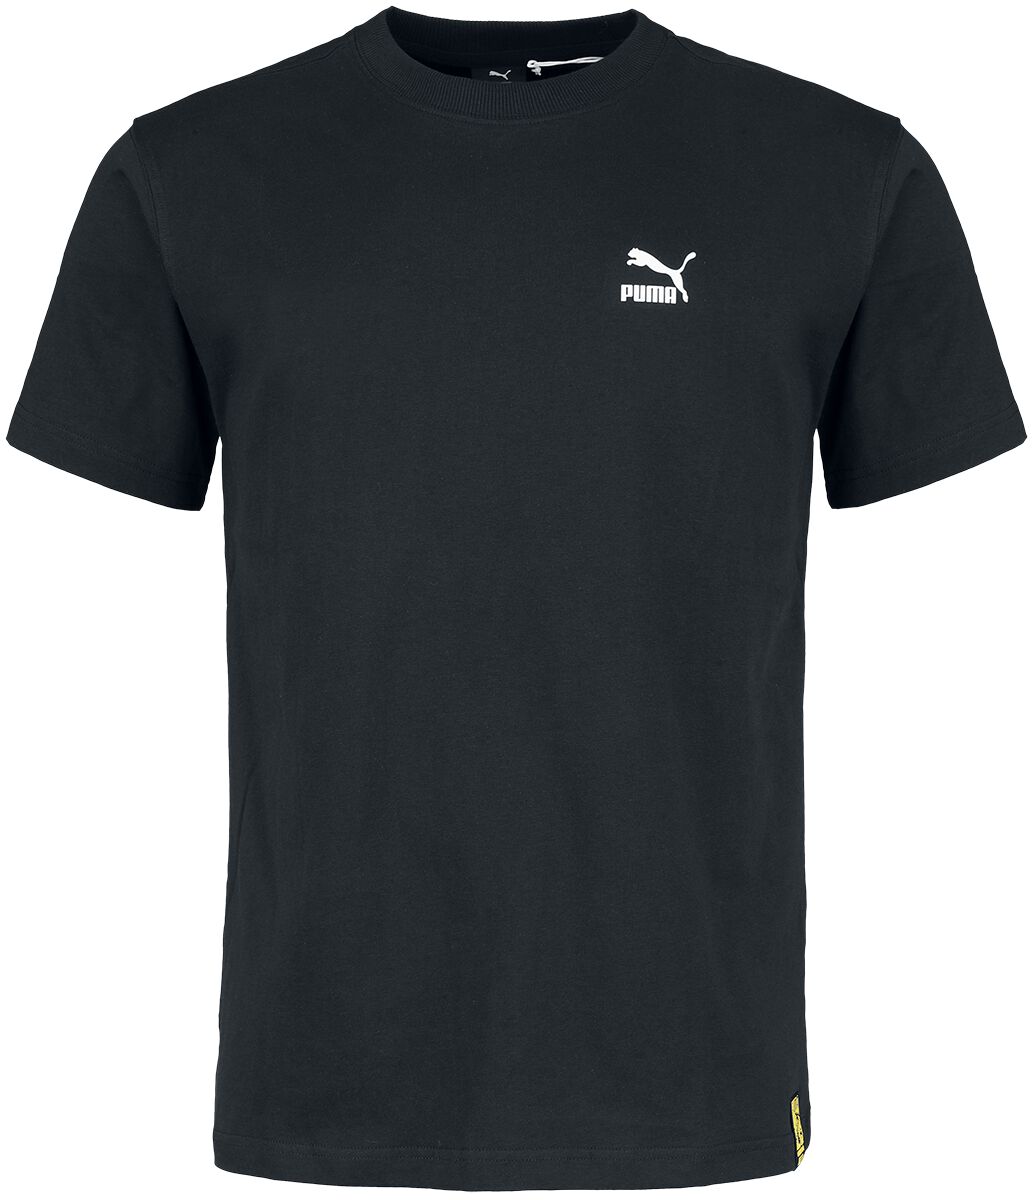 Puma PUMA X STAPLE Tee T-Shirt schwarz in S